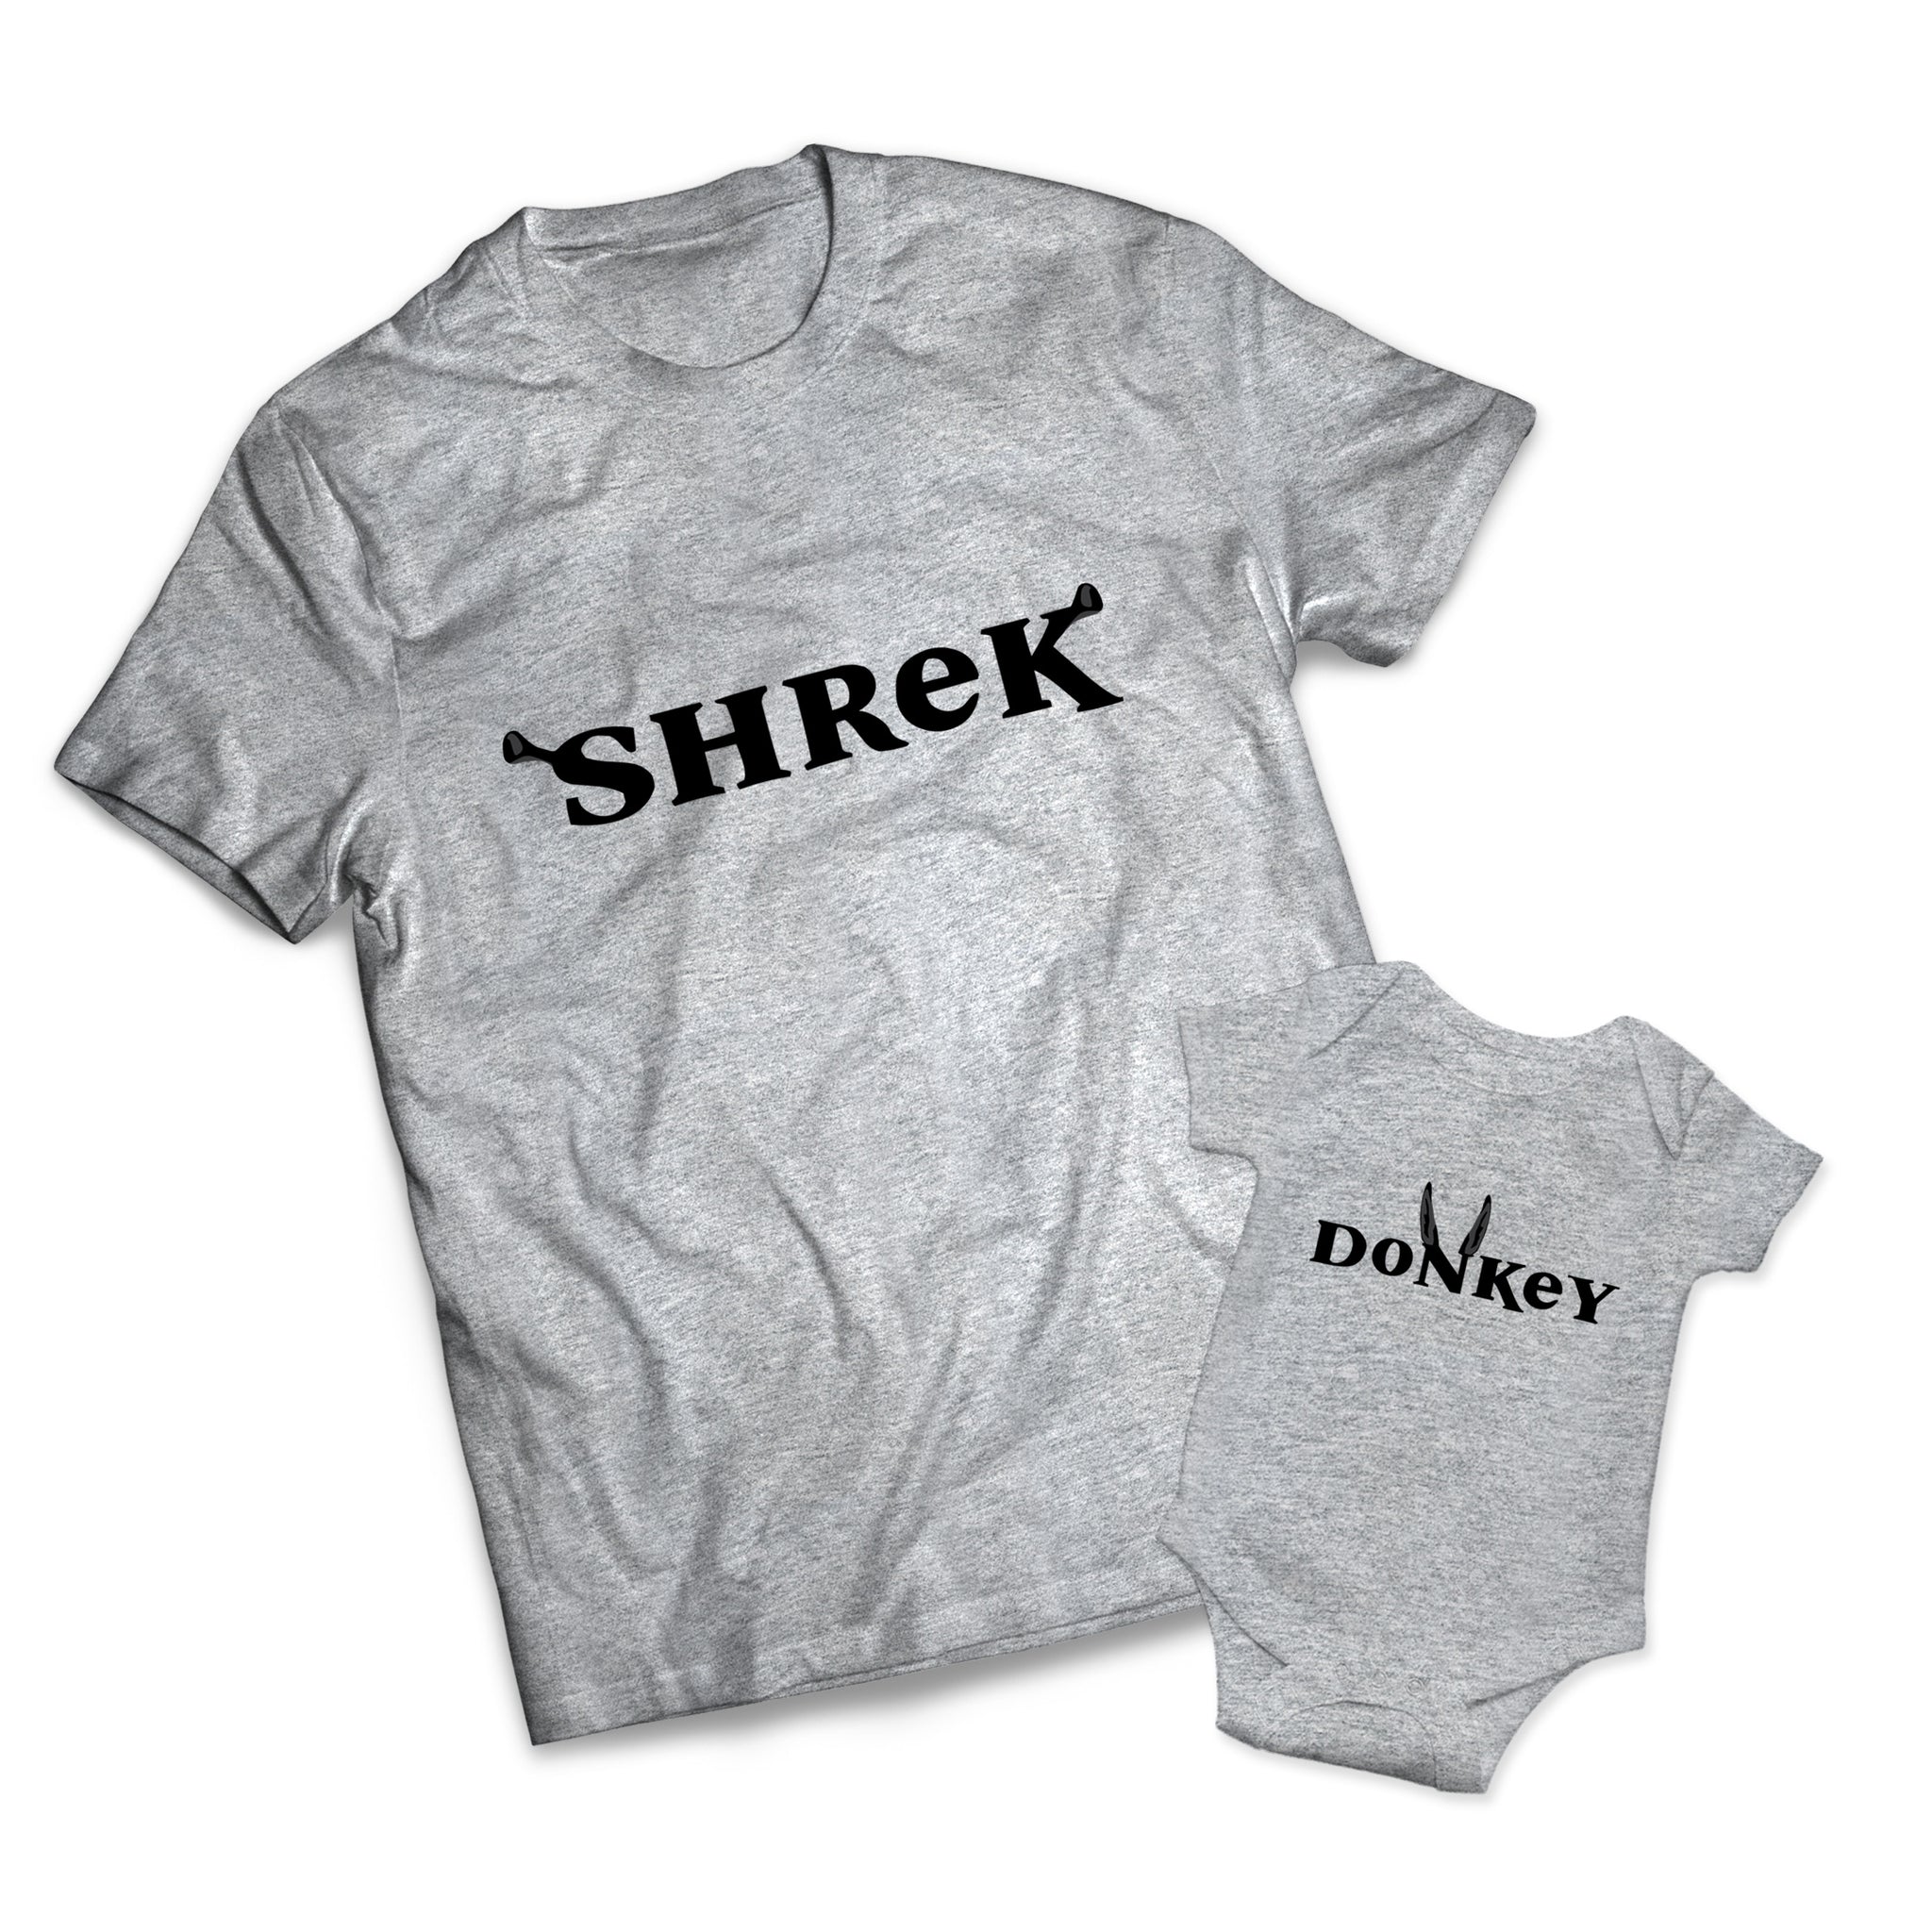 Shrek Donkey Set - Shrek -  Matching Shirts